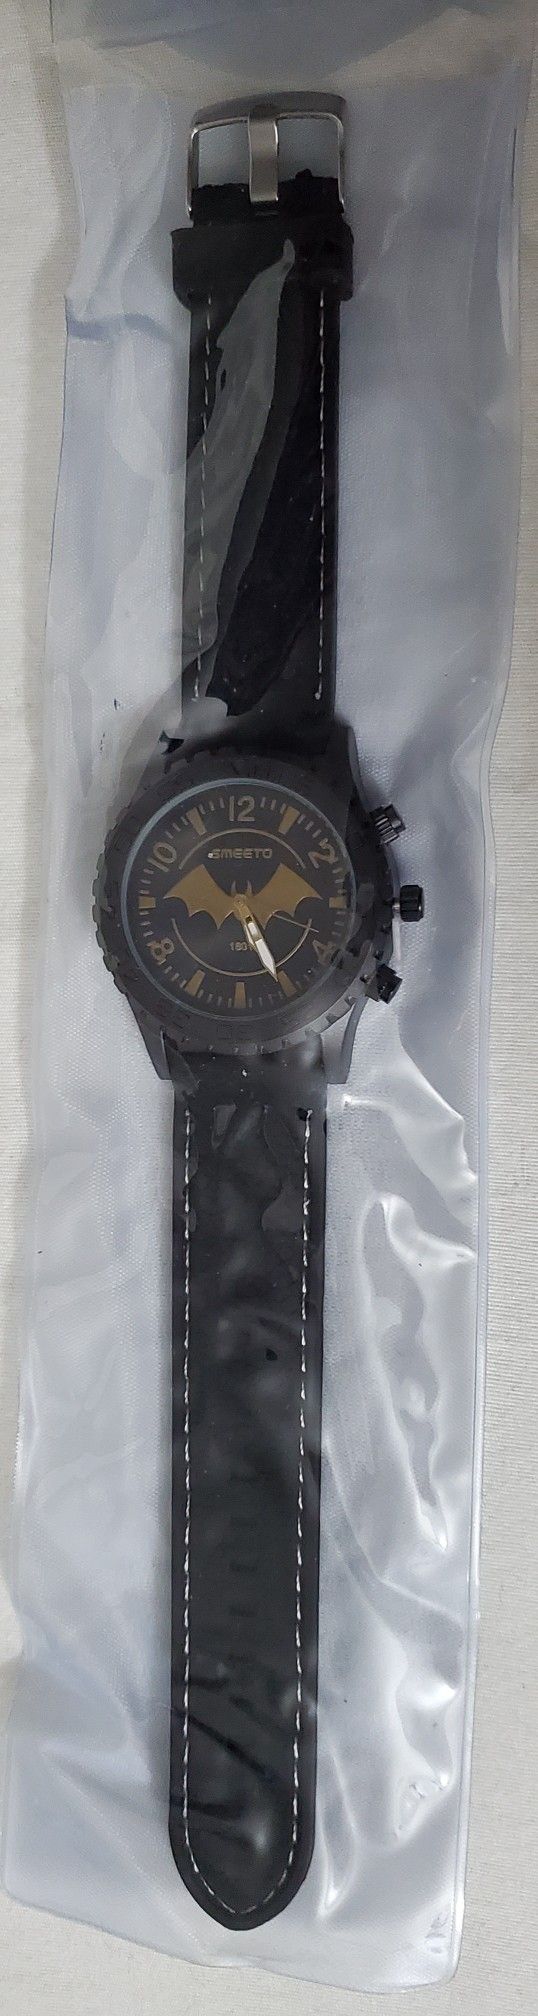 Batman Watch